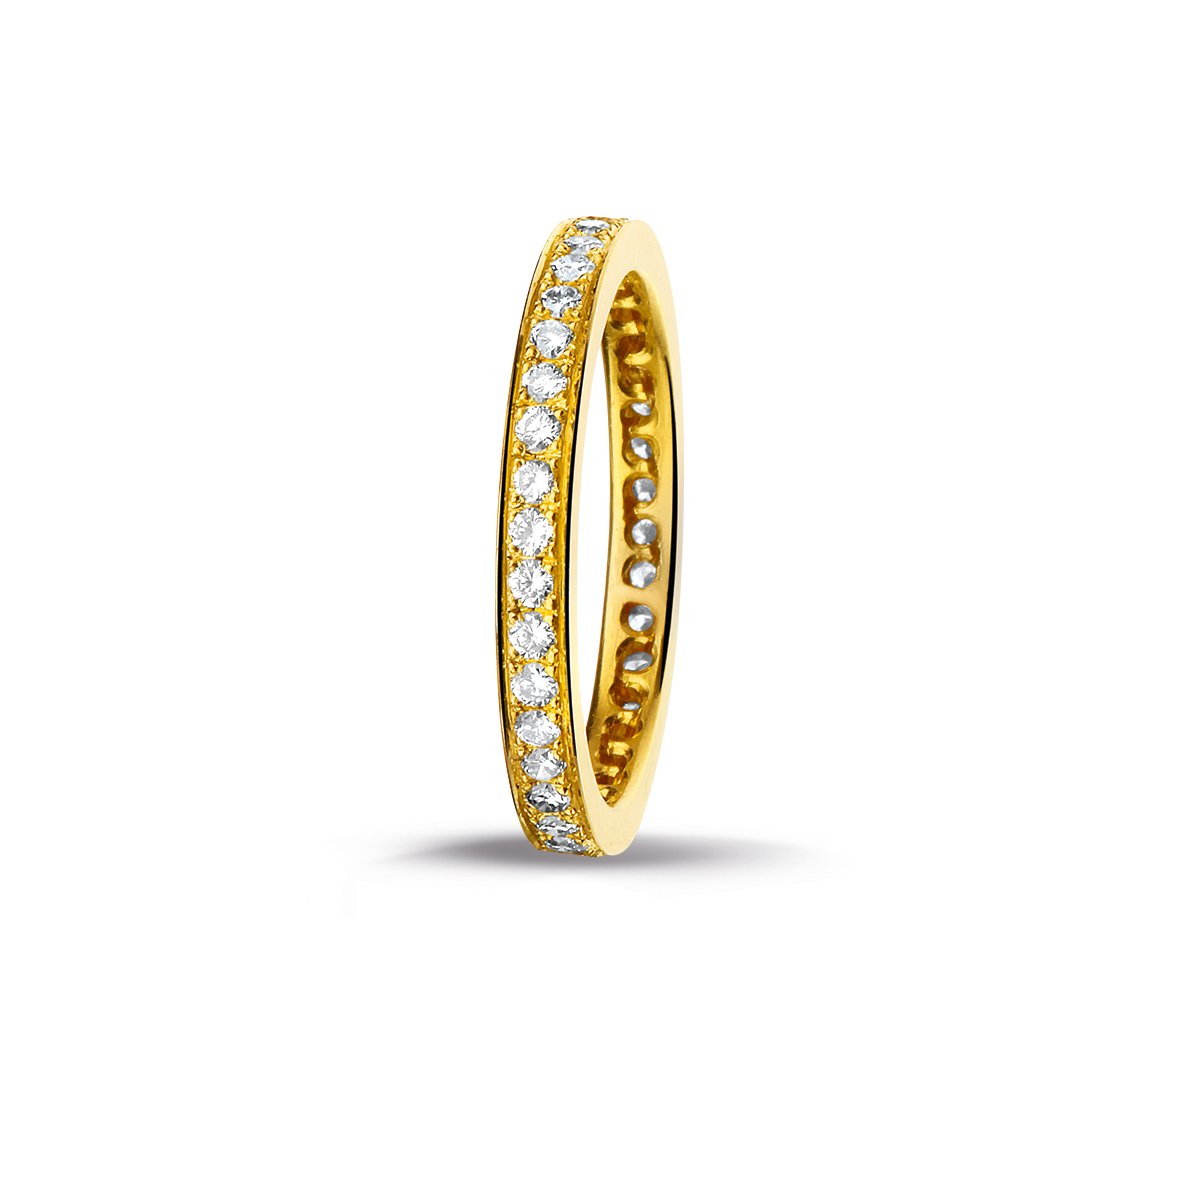 Bridal - Alliance ring